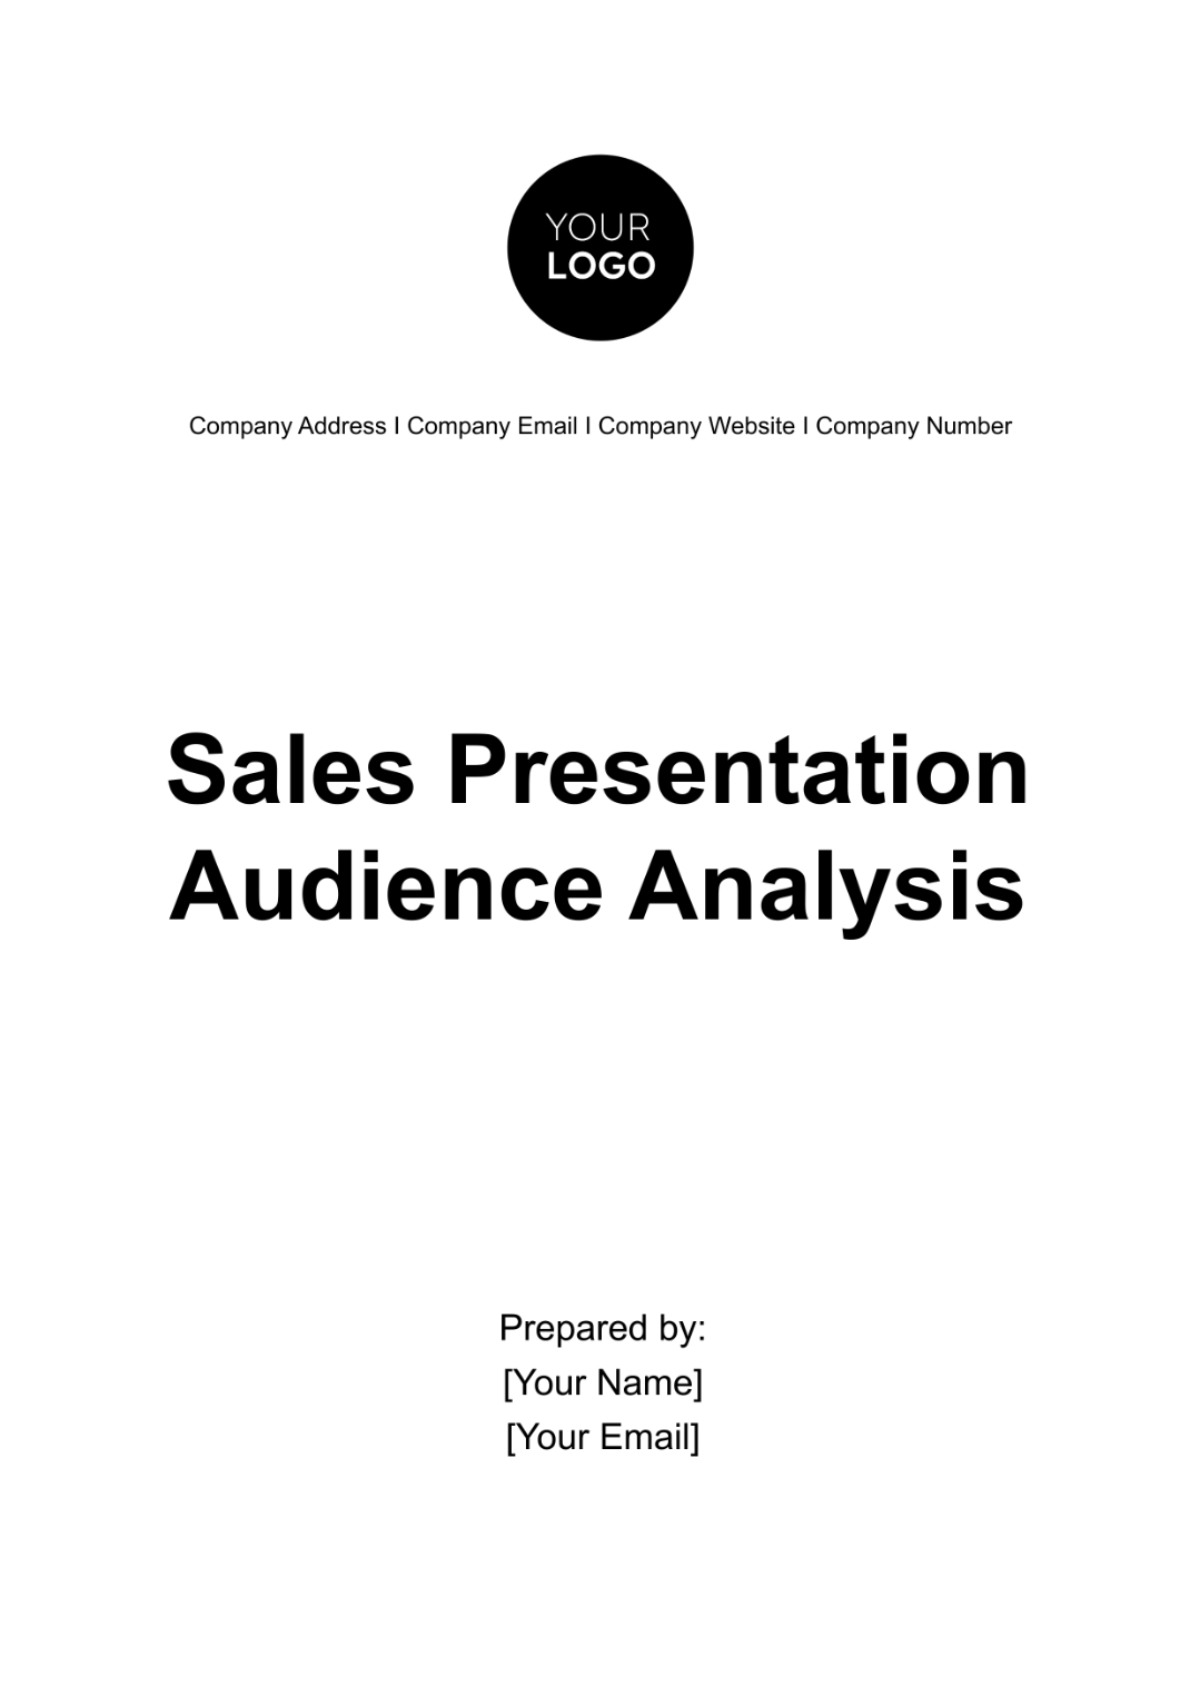 Sales Presentation Audience Analysis Template